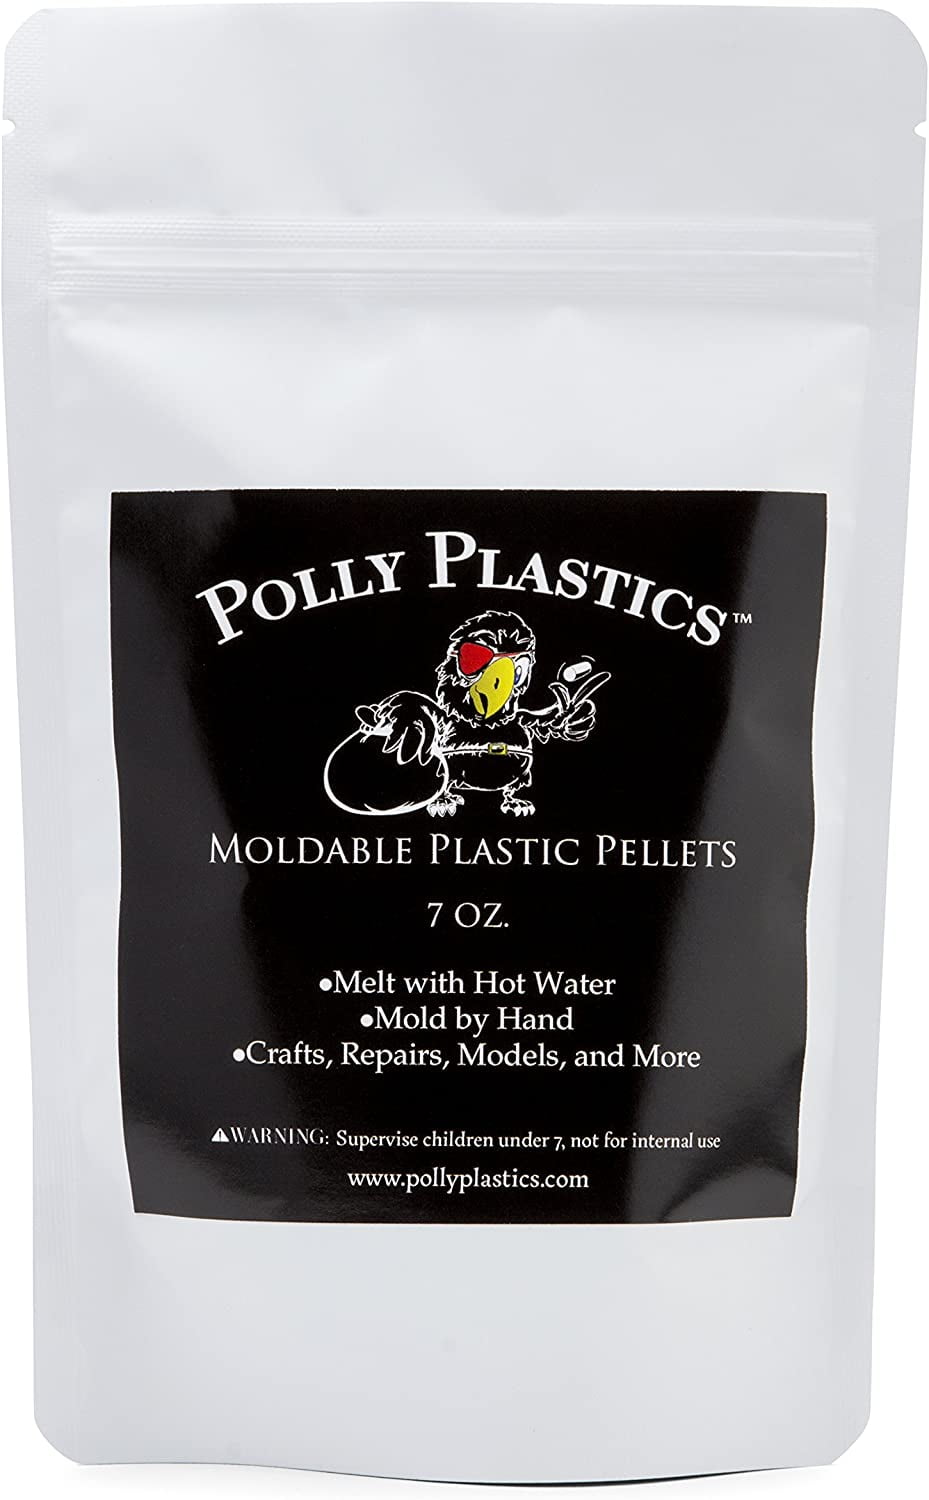 Moldable Plastic Pellets by Polly Plastics